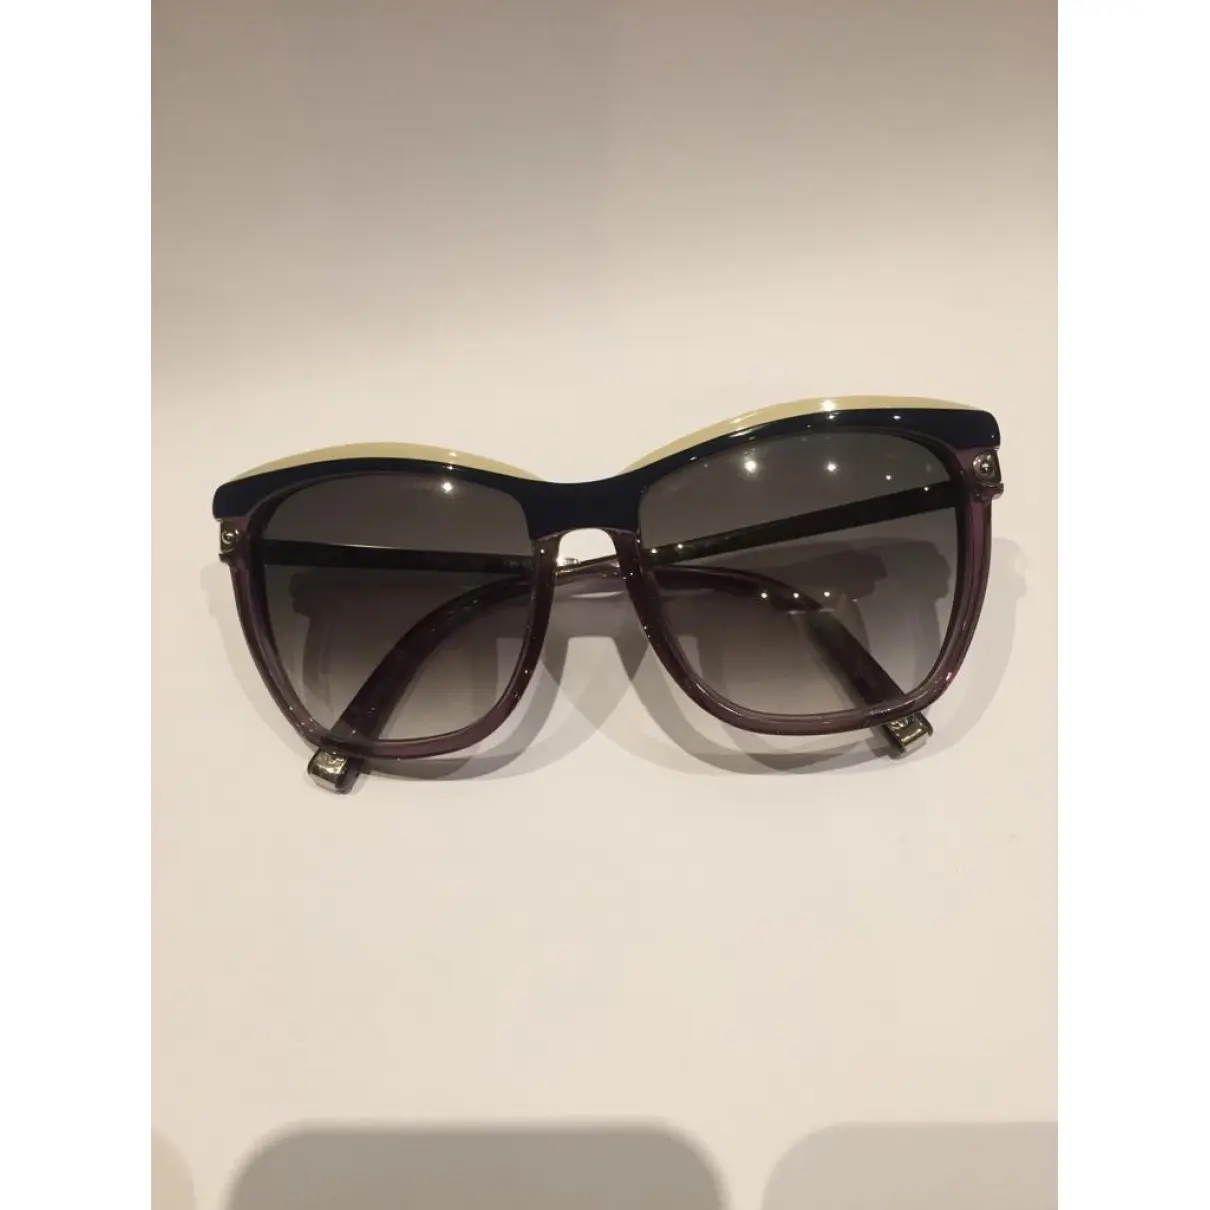 Buy Louis Vuitton Oversized sunglasses online